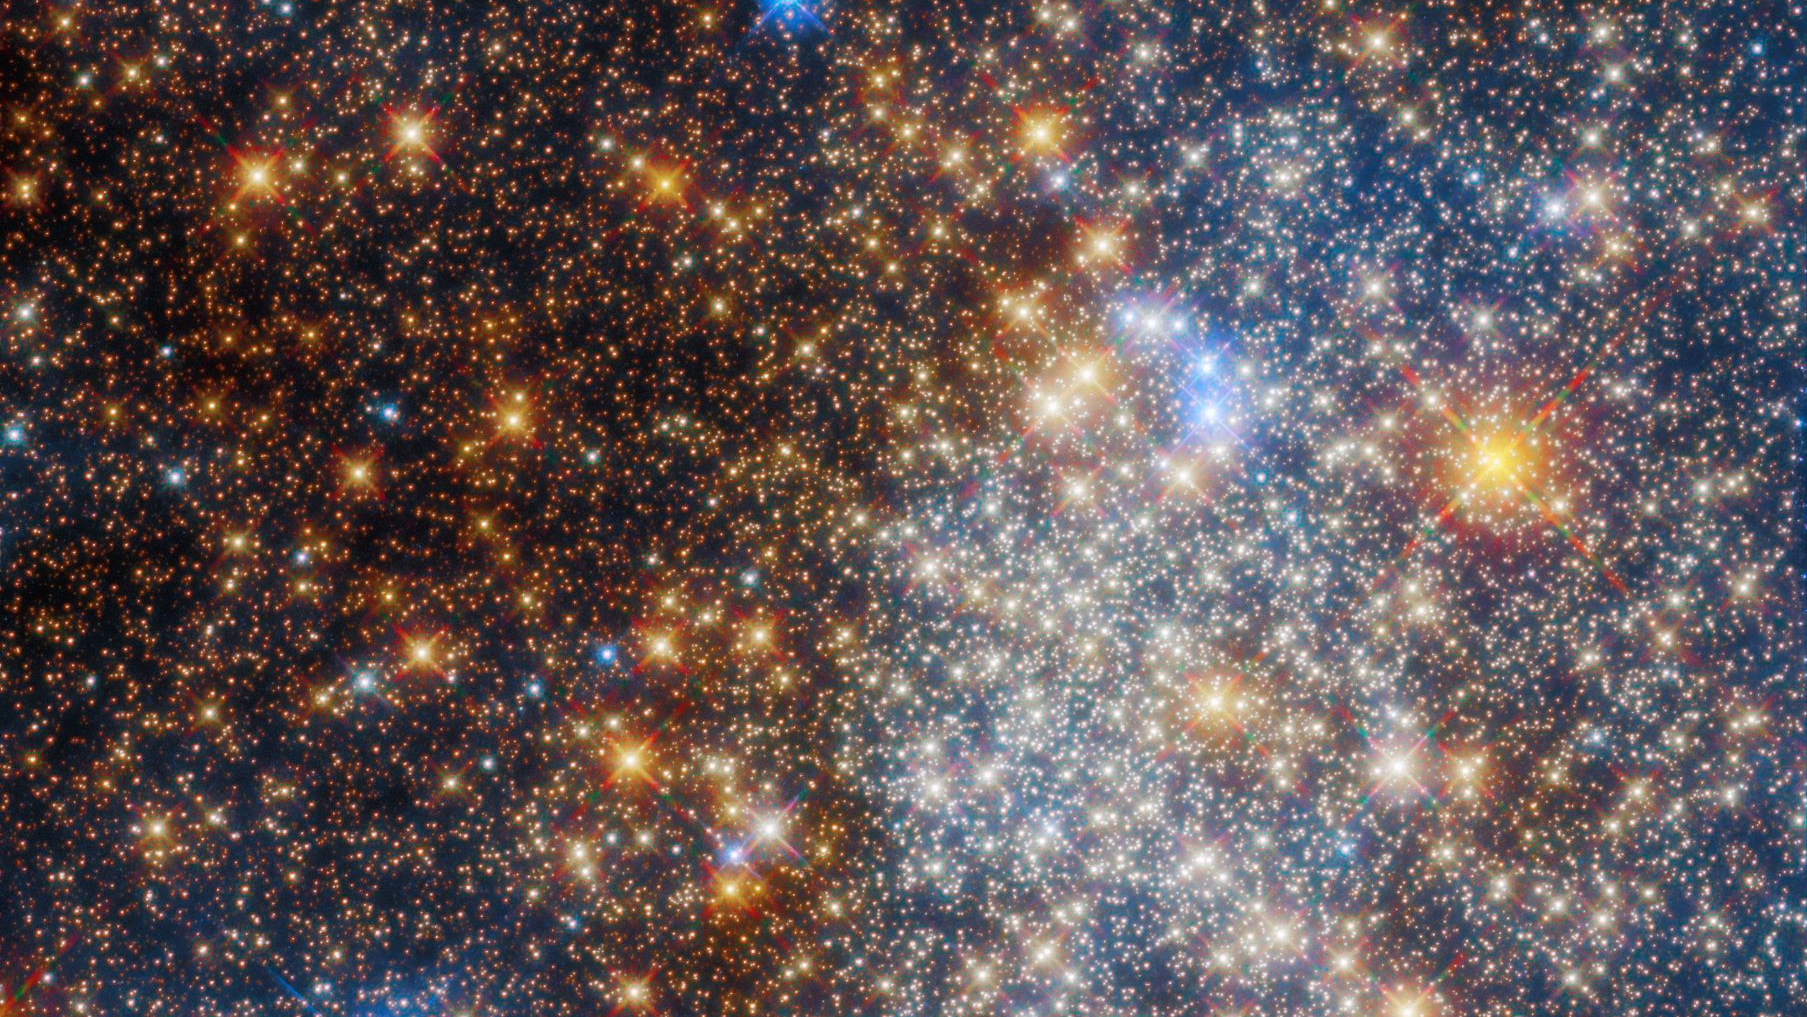 Globular cluster glitters in stunning new Hubble telescope photo | Space